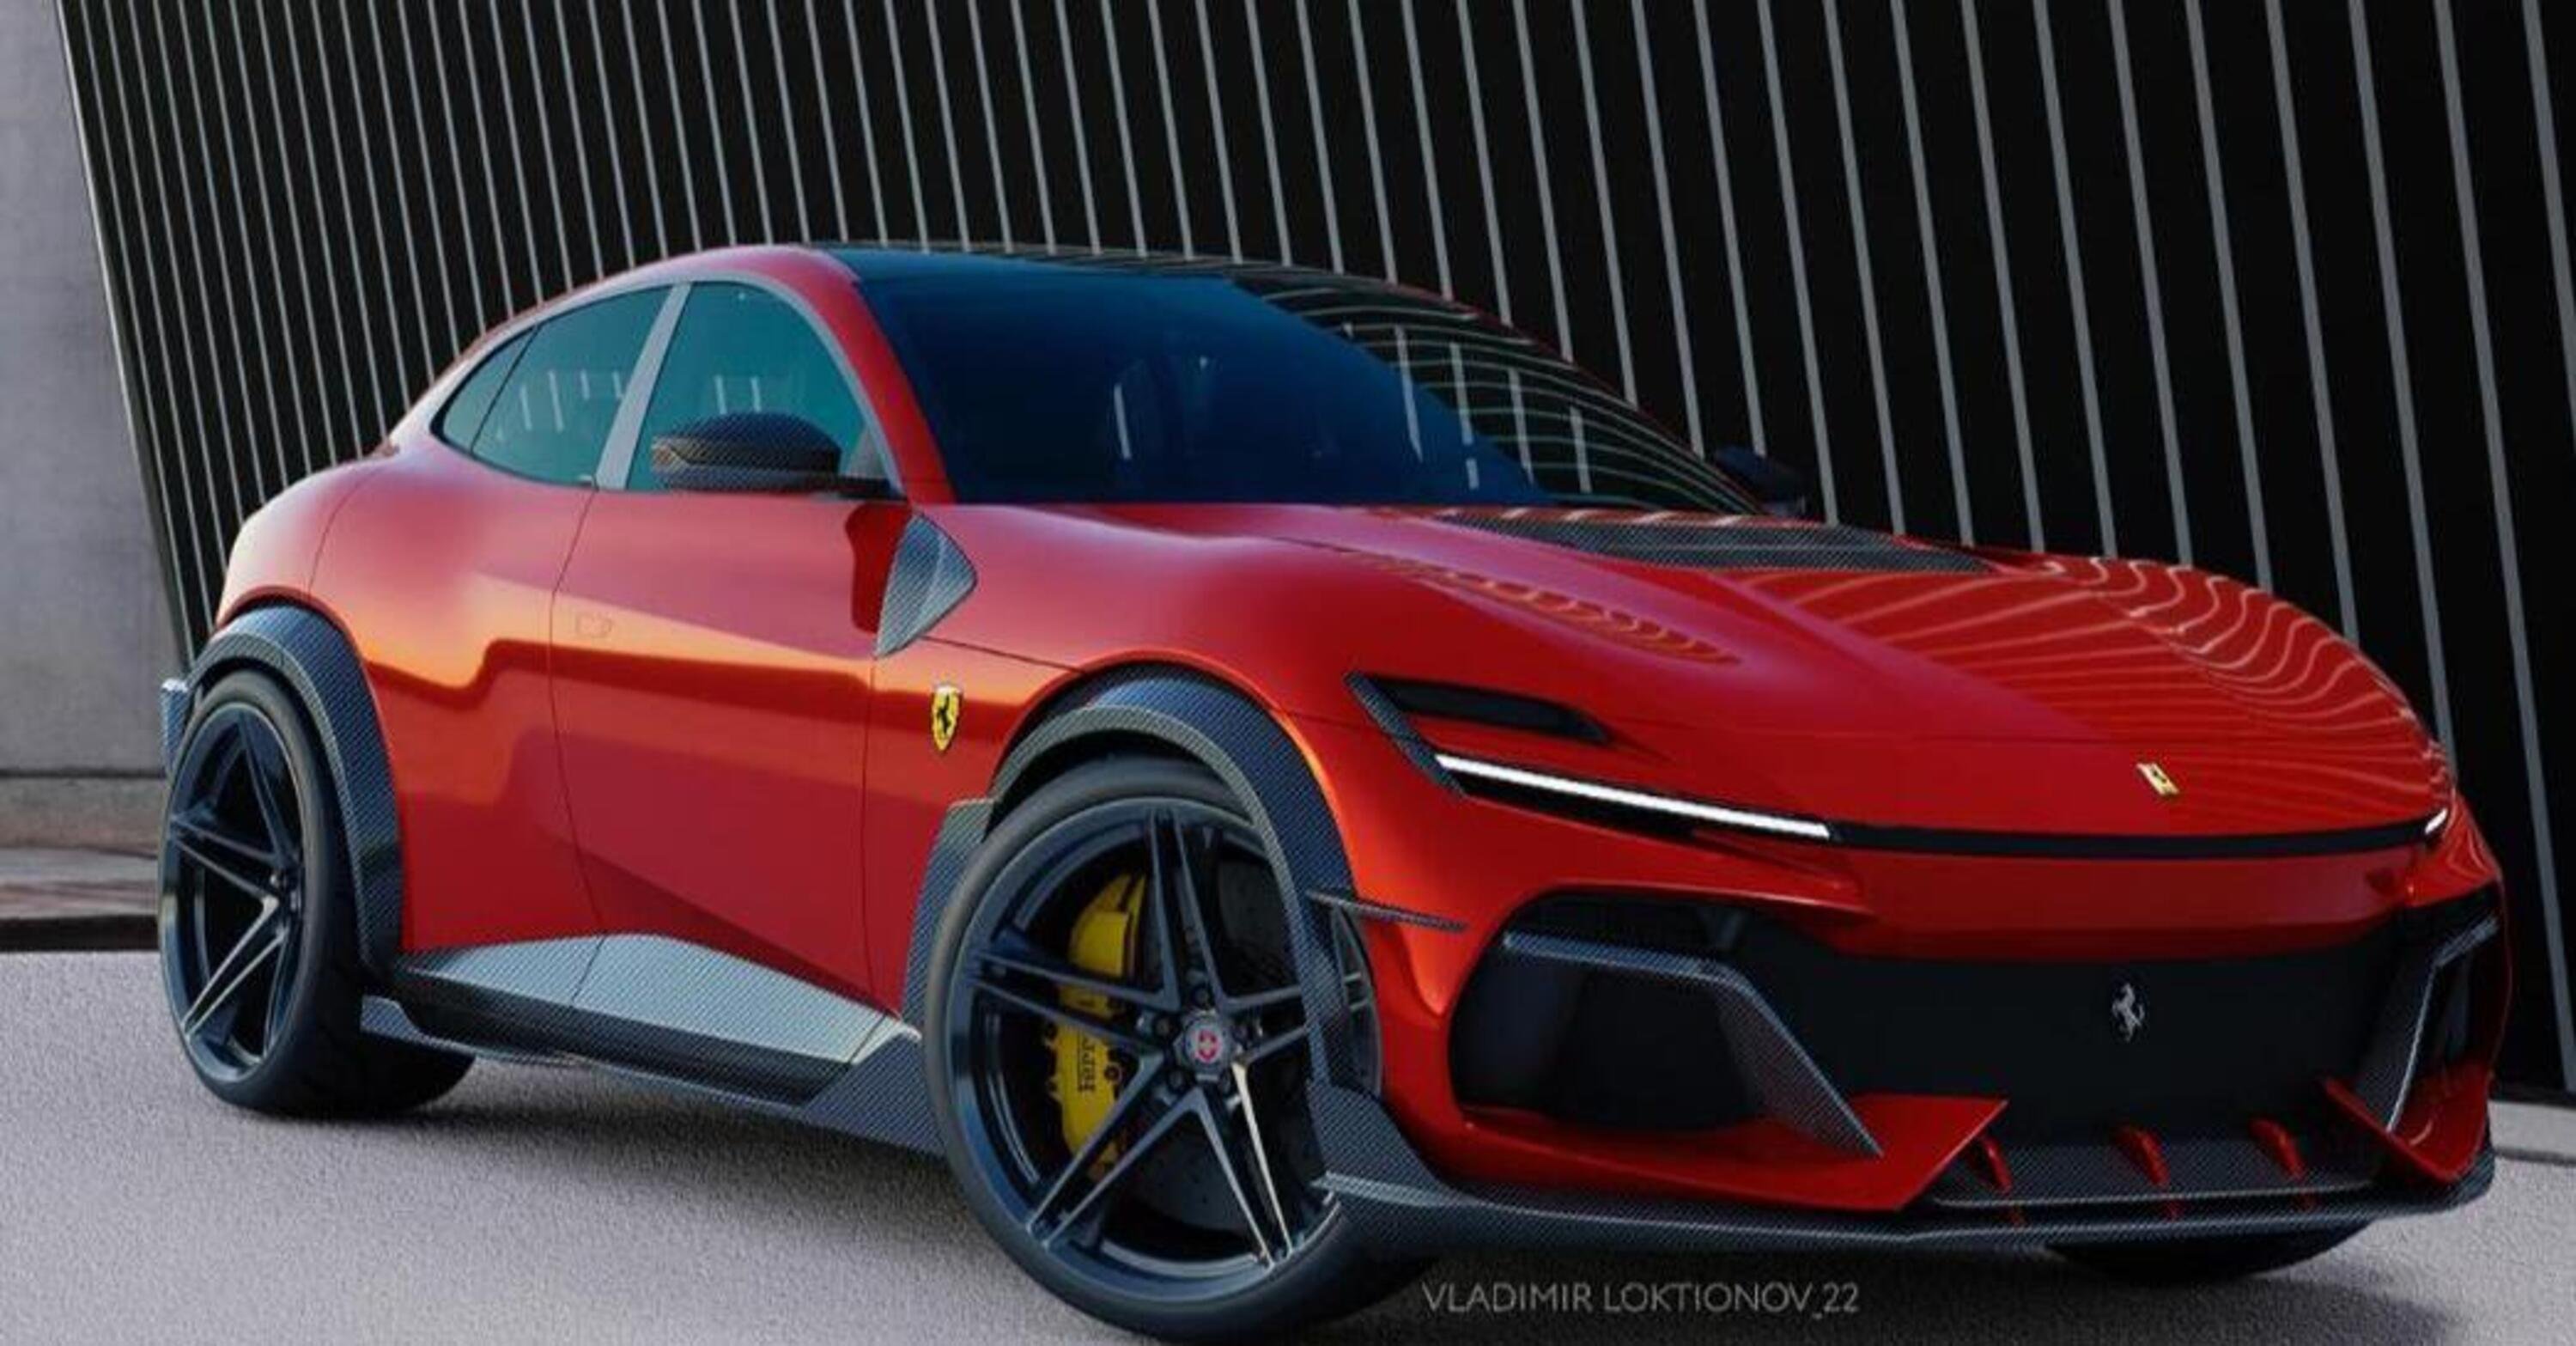 Ferrari Purosangue: spuntano i primi kit tuning a ruote larghe e carbonio